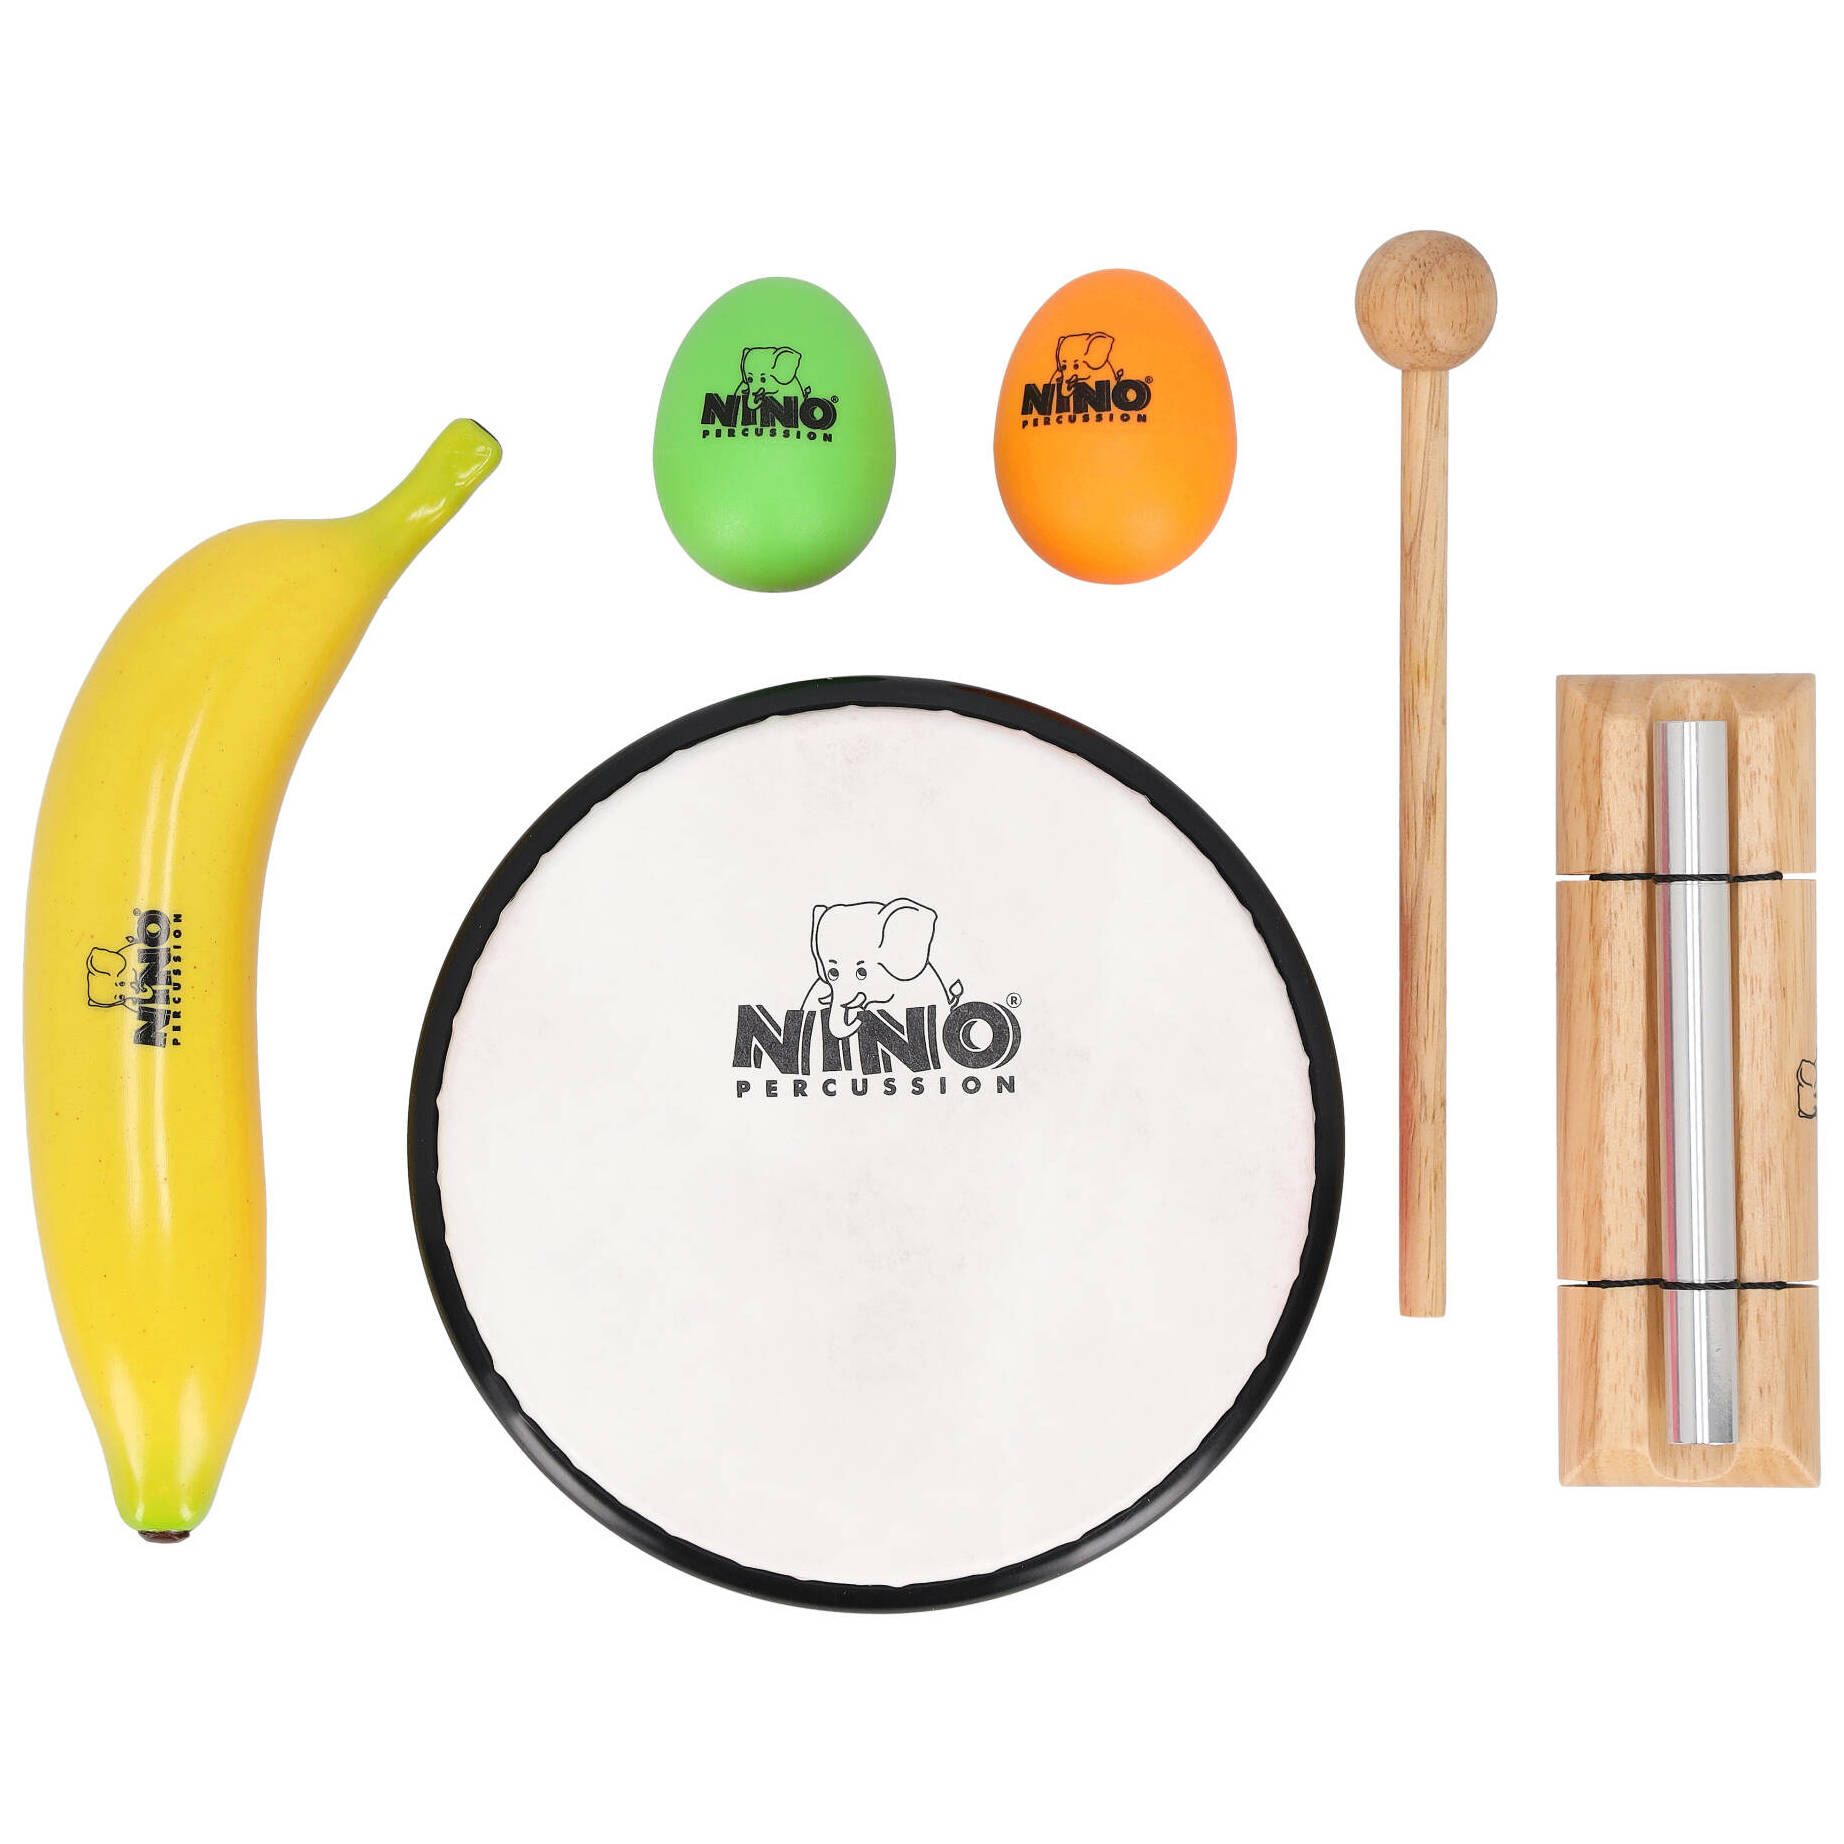 Nino Percussion NINO Percussion 5er Rhythmus Set für Kinder